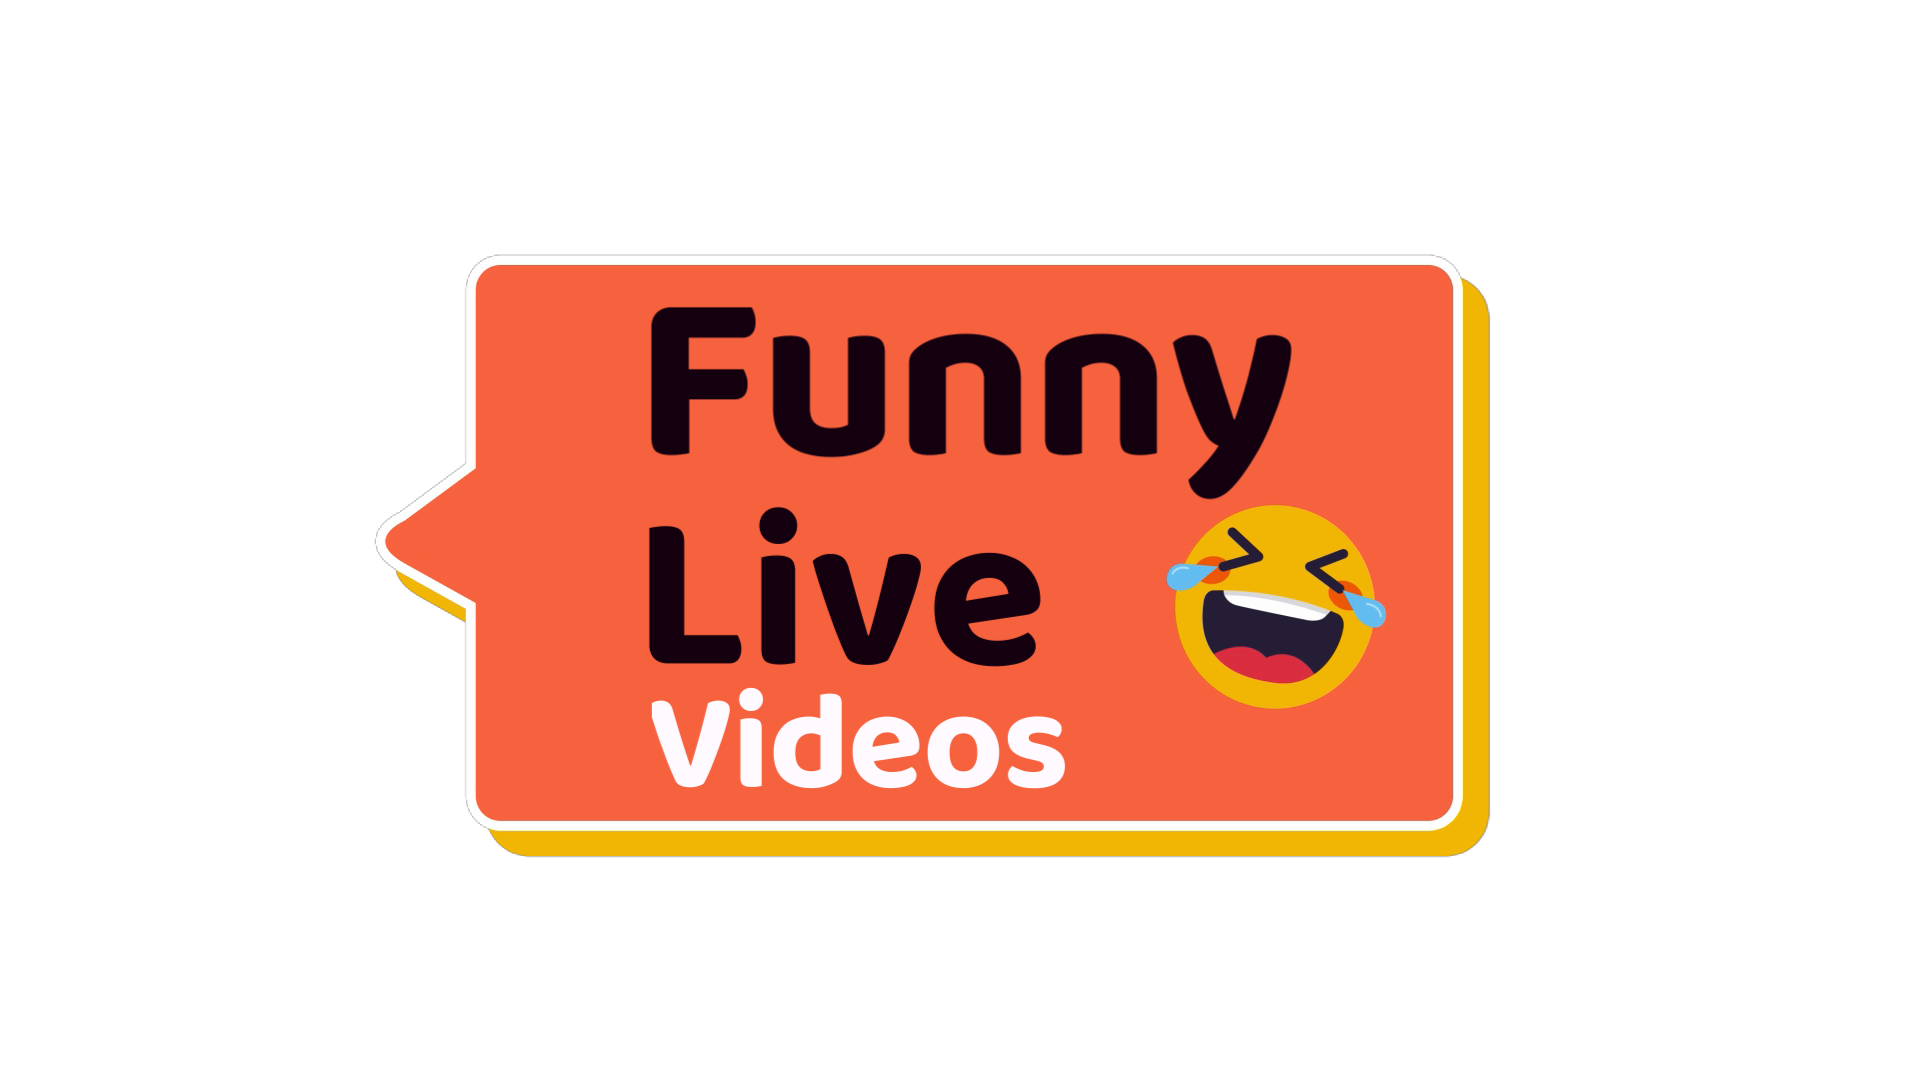 Funny videos, funny memes, funny pictures, funny movies, videos graciosos, videos xxx